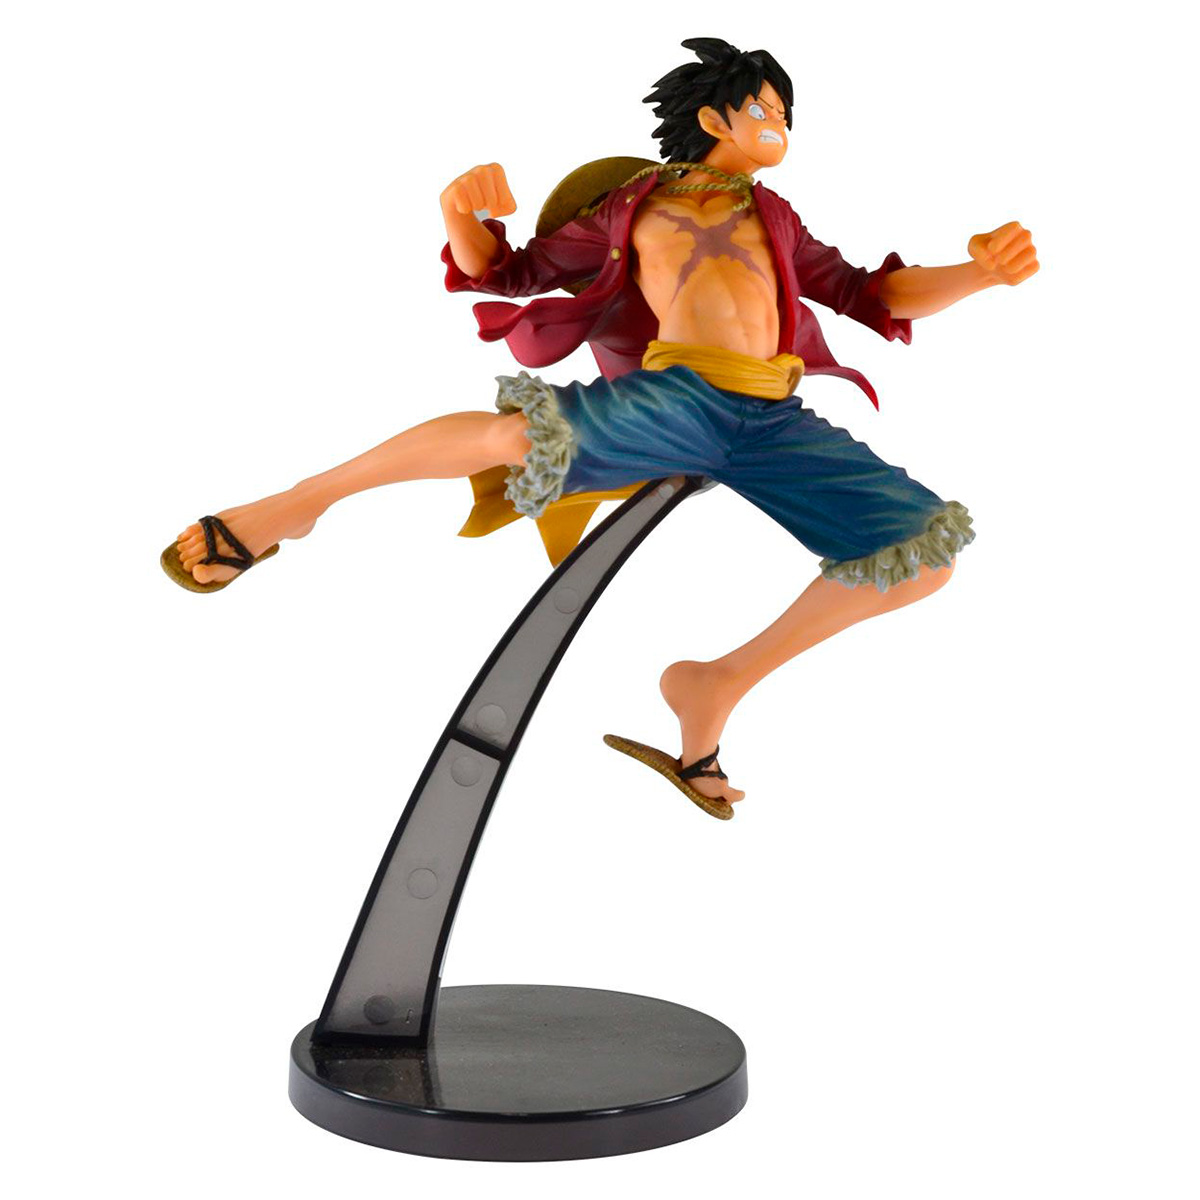 Action Figure - One Piece WFC - World Figure Colosseum - Monkey D. Luffy Special - Bandai Banpresto 26868/26869